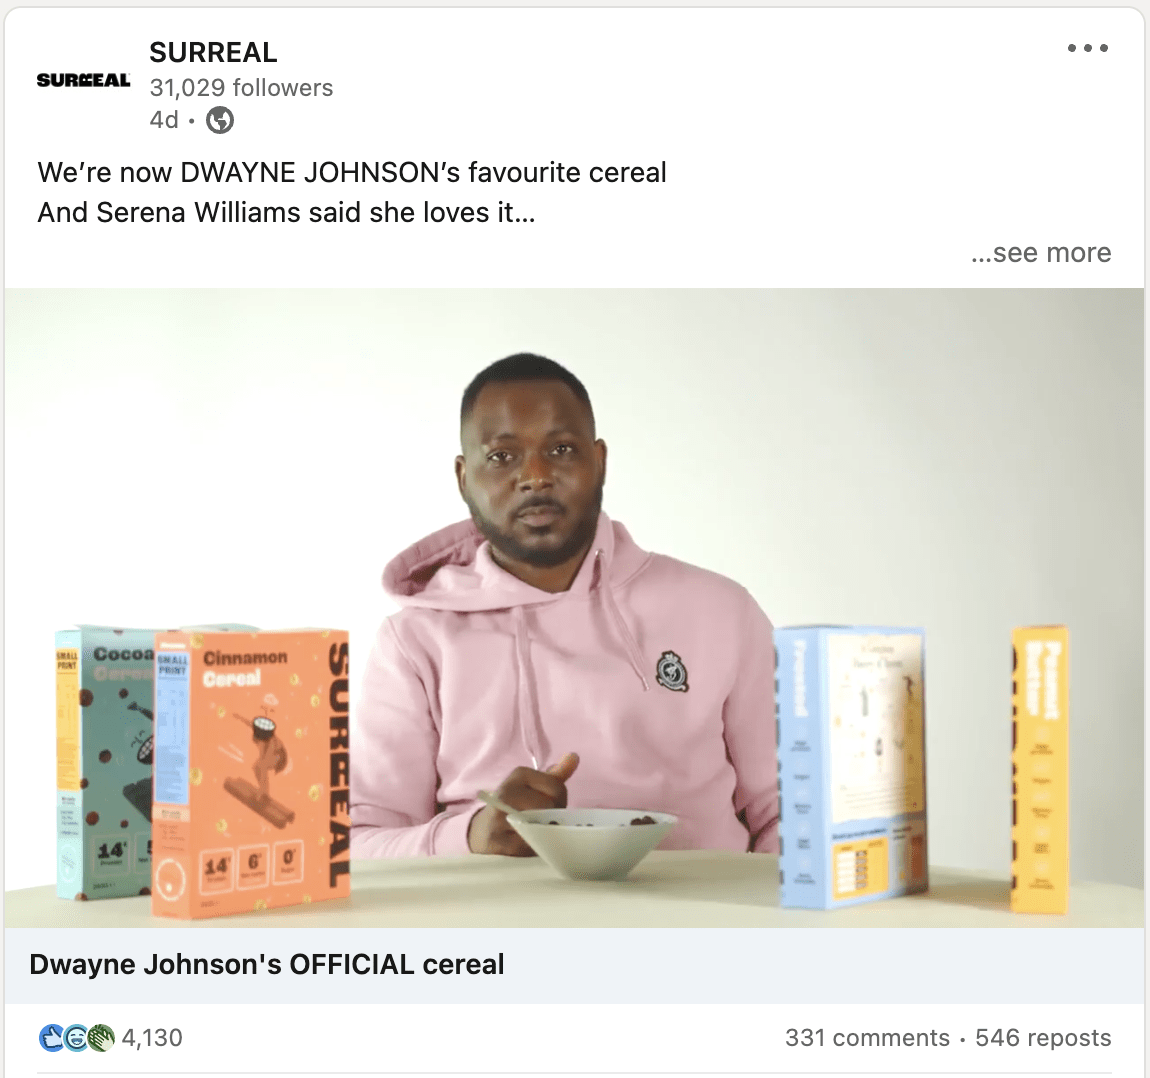 https://thebasispoint.com/wp-content/uploads/2023/03/Surreal-Cereal-LinkedIn-post-Dwayne-Johnson-Serena-Williams-Michael-Jordan-Ronaldos-favorite-cereal-The-Basis-Point.png